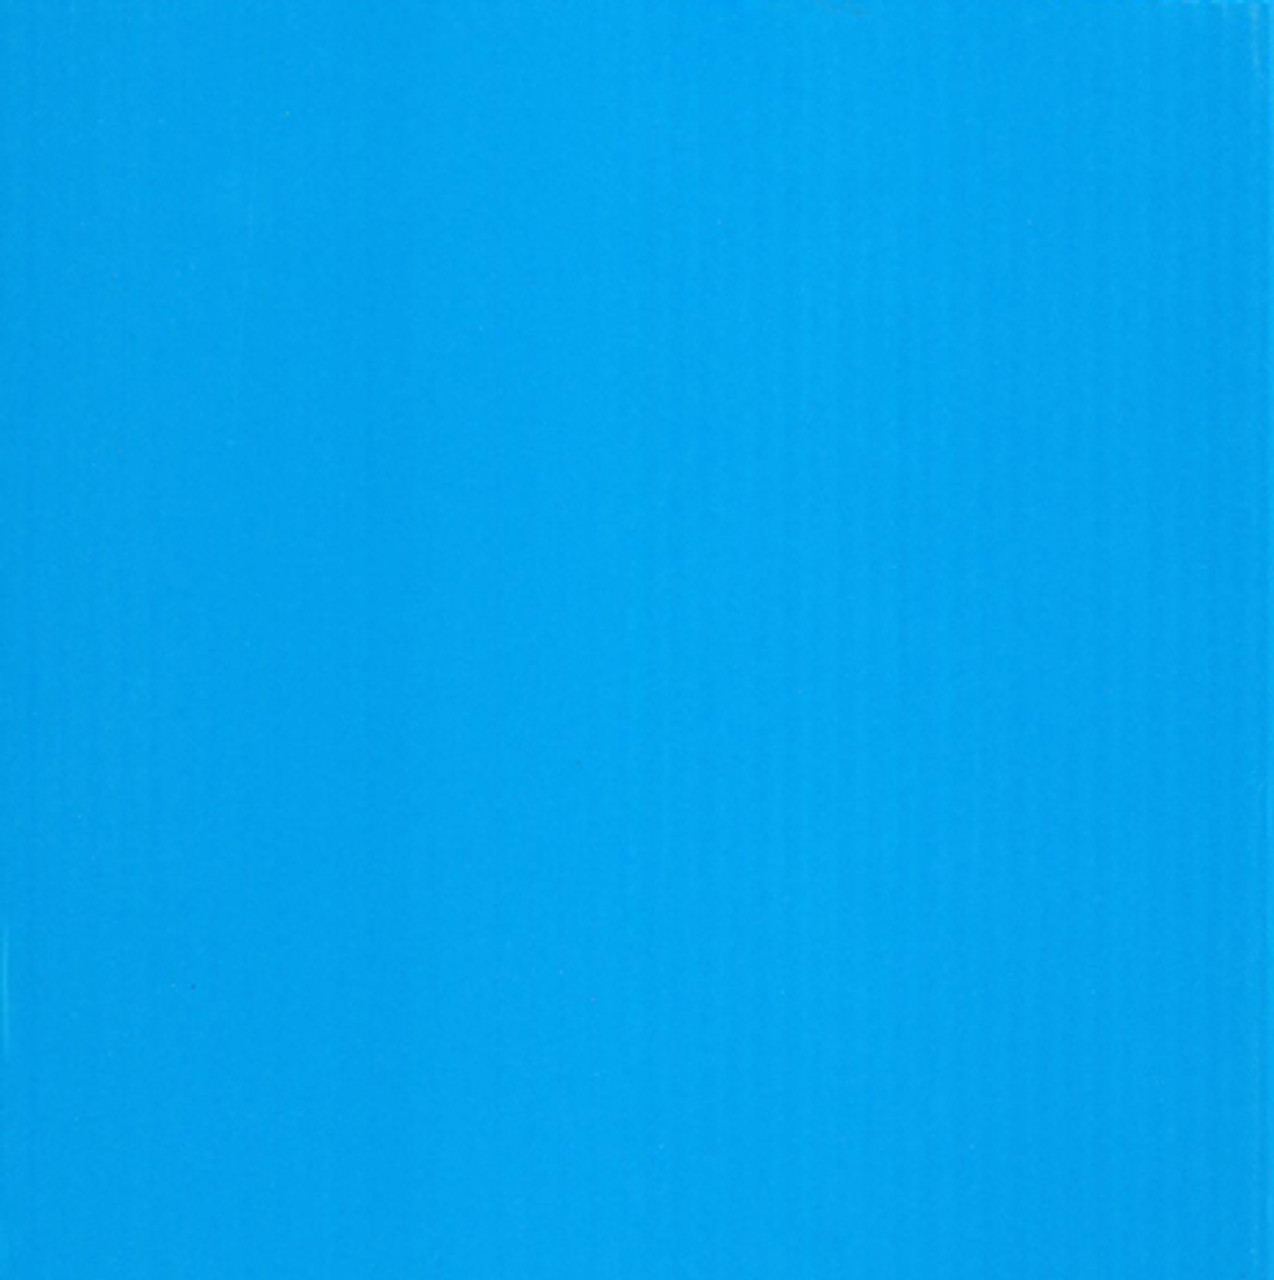 4mm Corrugated plastic sheets: 36 x 36 : 100% Virgin Neon Blue Pad : Single pc